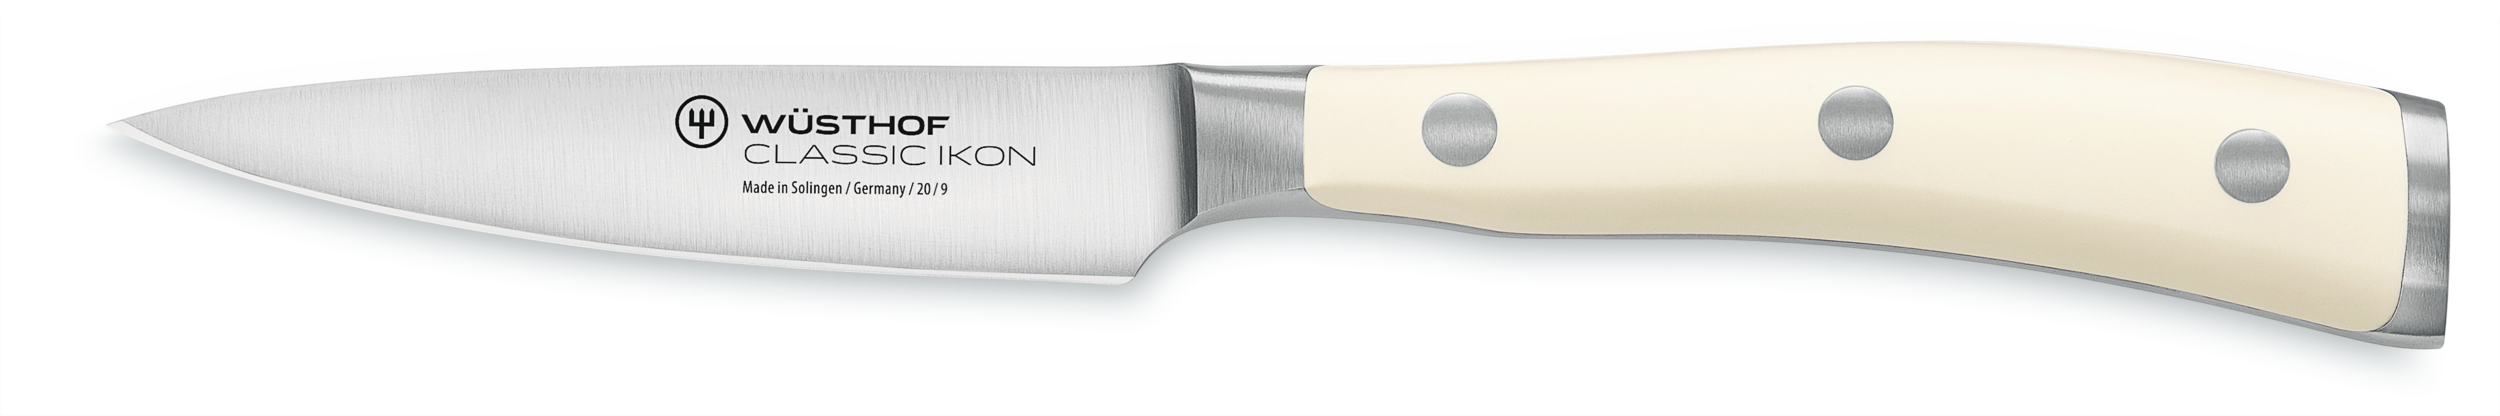 Wusthof Classic Ikon Creme Paring Knife 9cm 1040430409